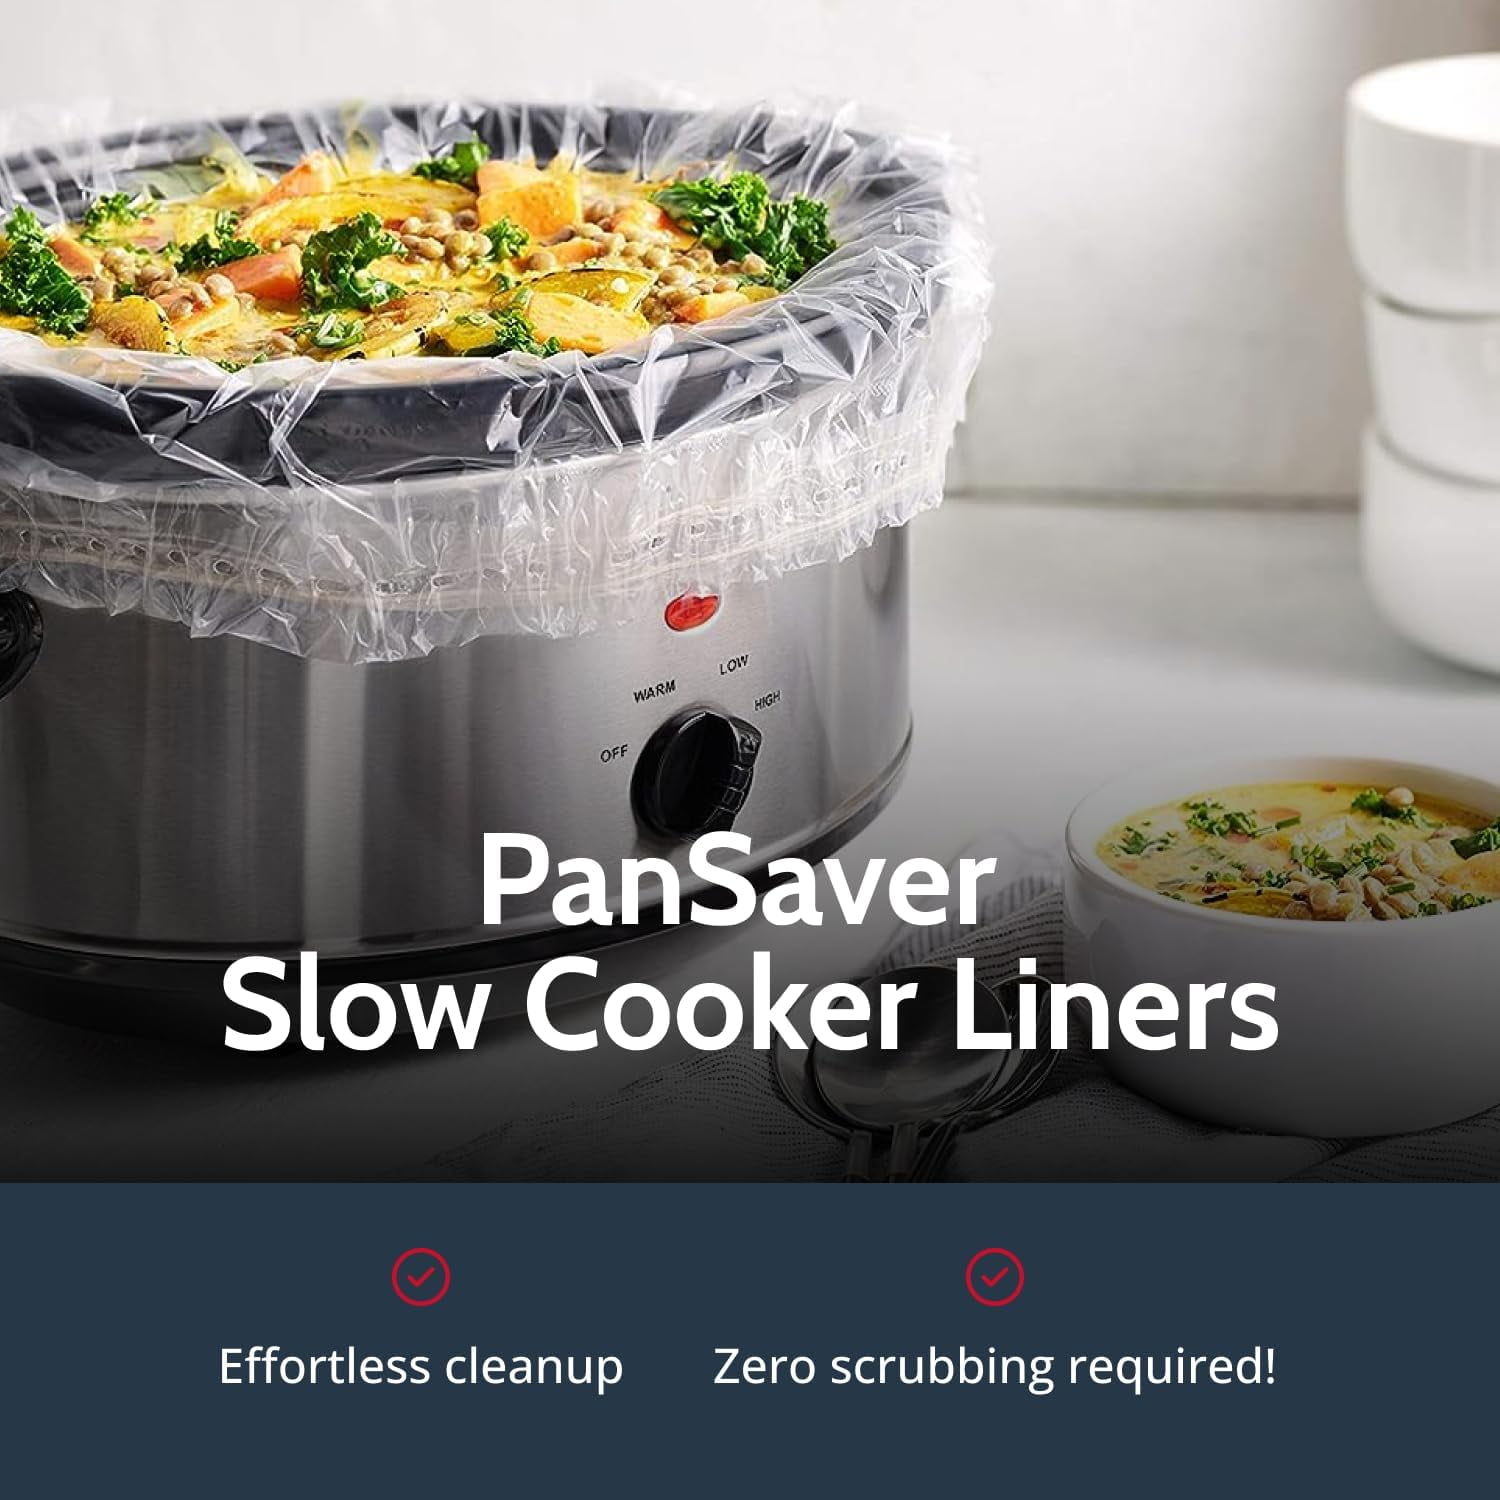 Regency 8 pk Slow Cooker Savers - Disposable Crock Pot Liner